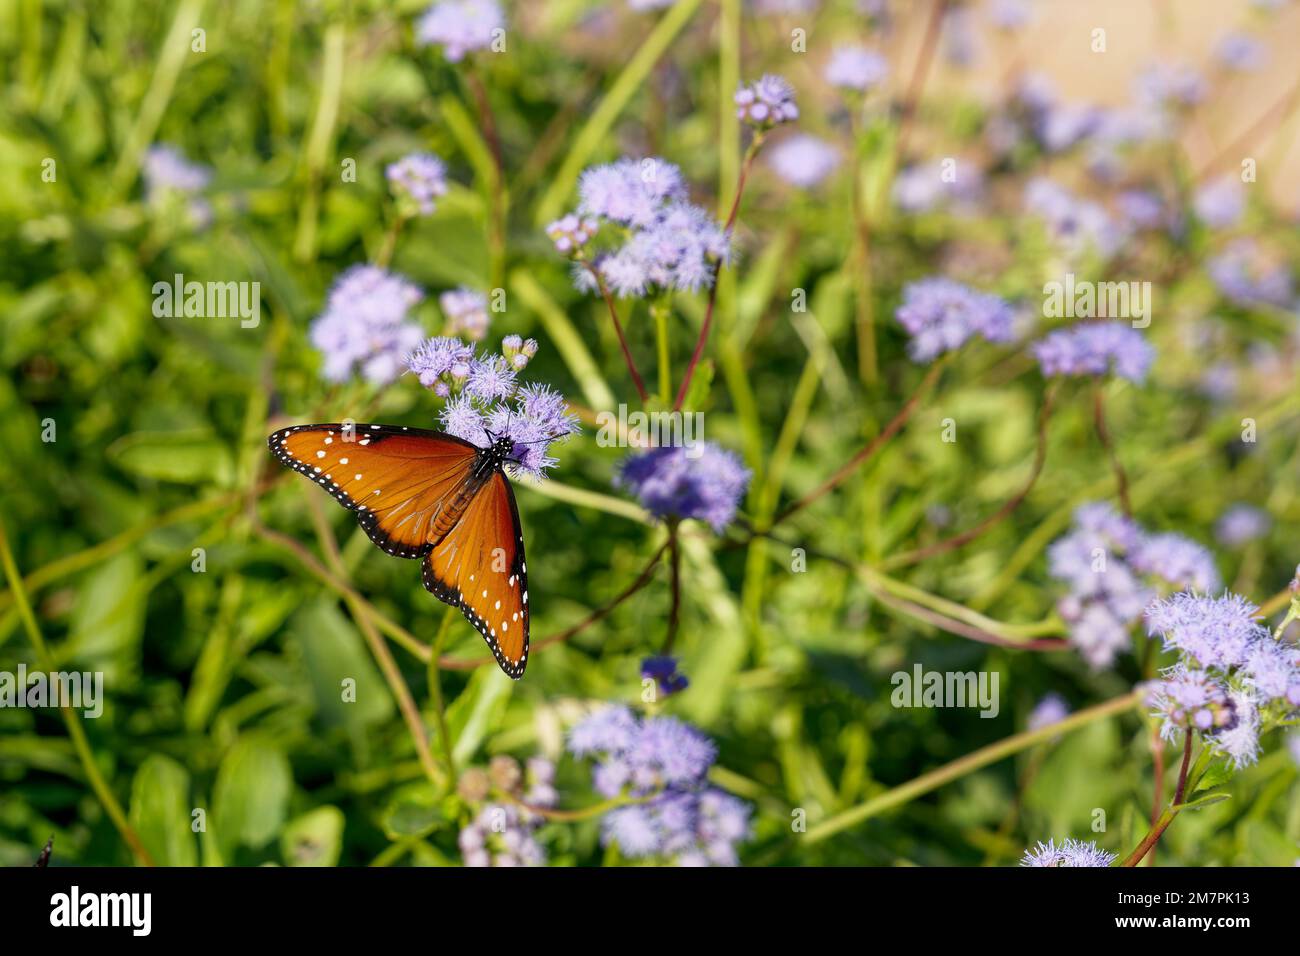 orange and black Queen butterfly, Danaus gilippus,  on blue mistflowers with soft focus green garden background. butterflies are a symbol of rebirth, Stock Photo